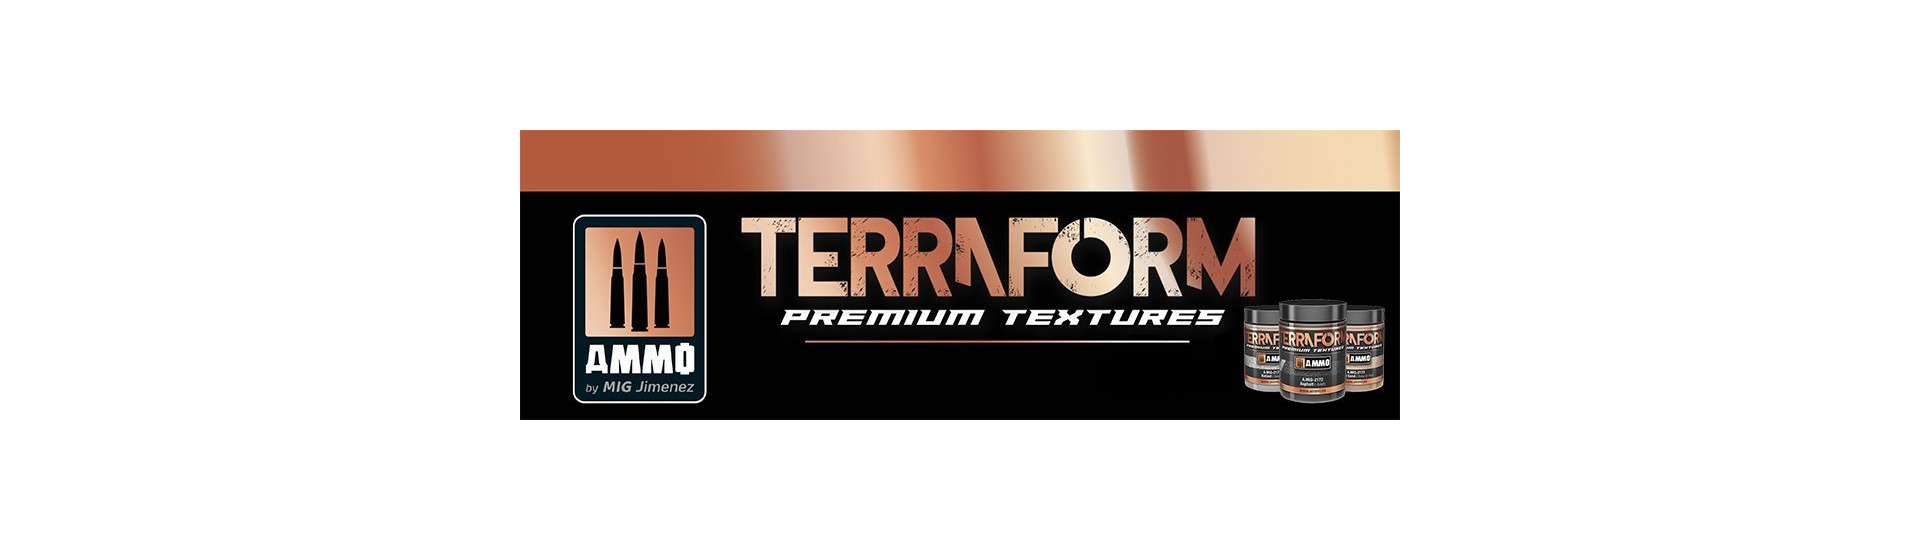 Terraform Ammo